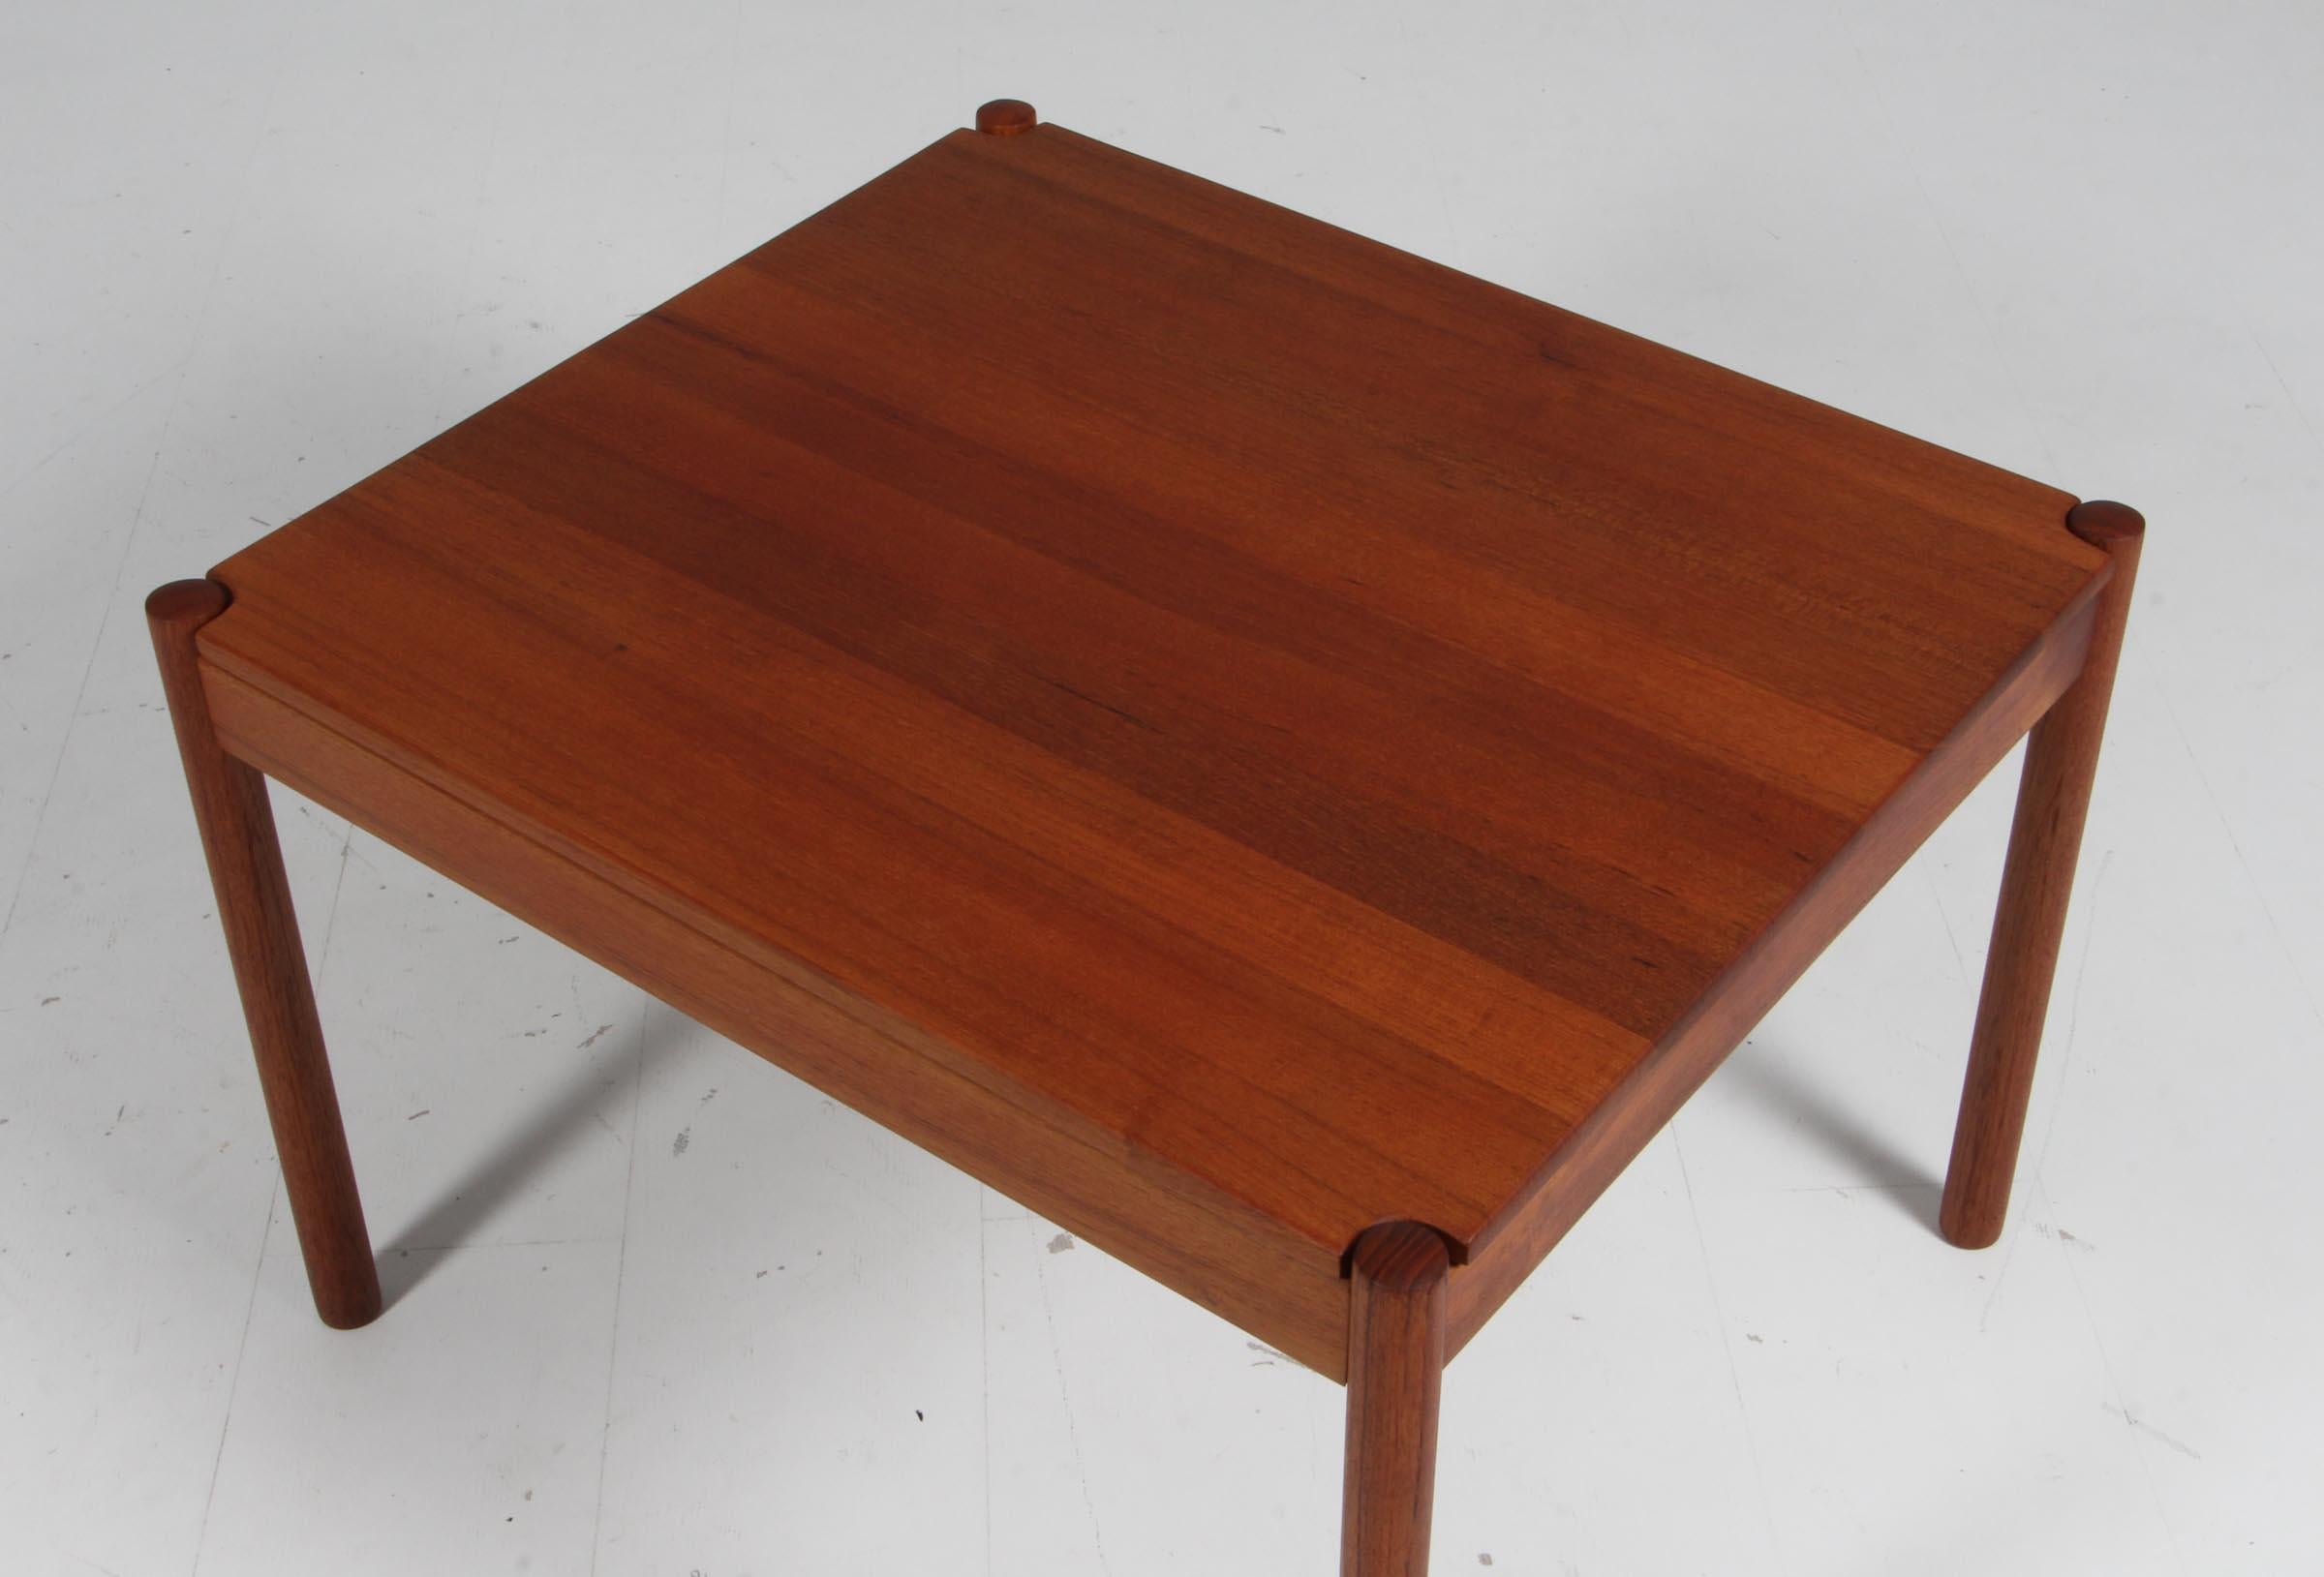 Kai Kristiansen sofa table in teak with turnable top.

Made by Magnus Olsen.